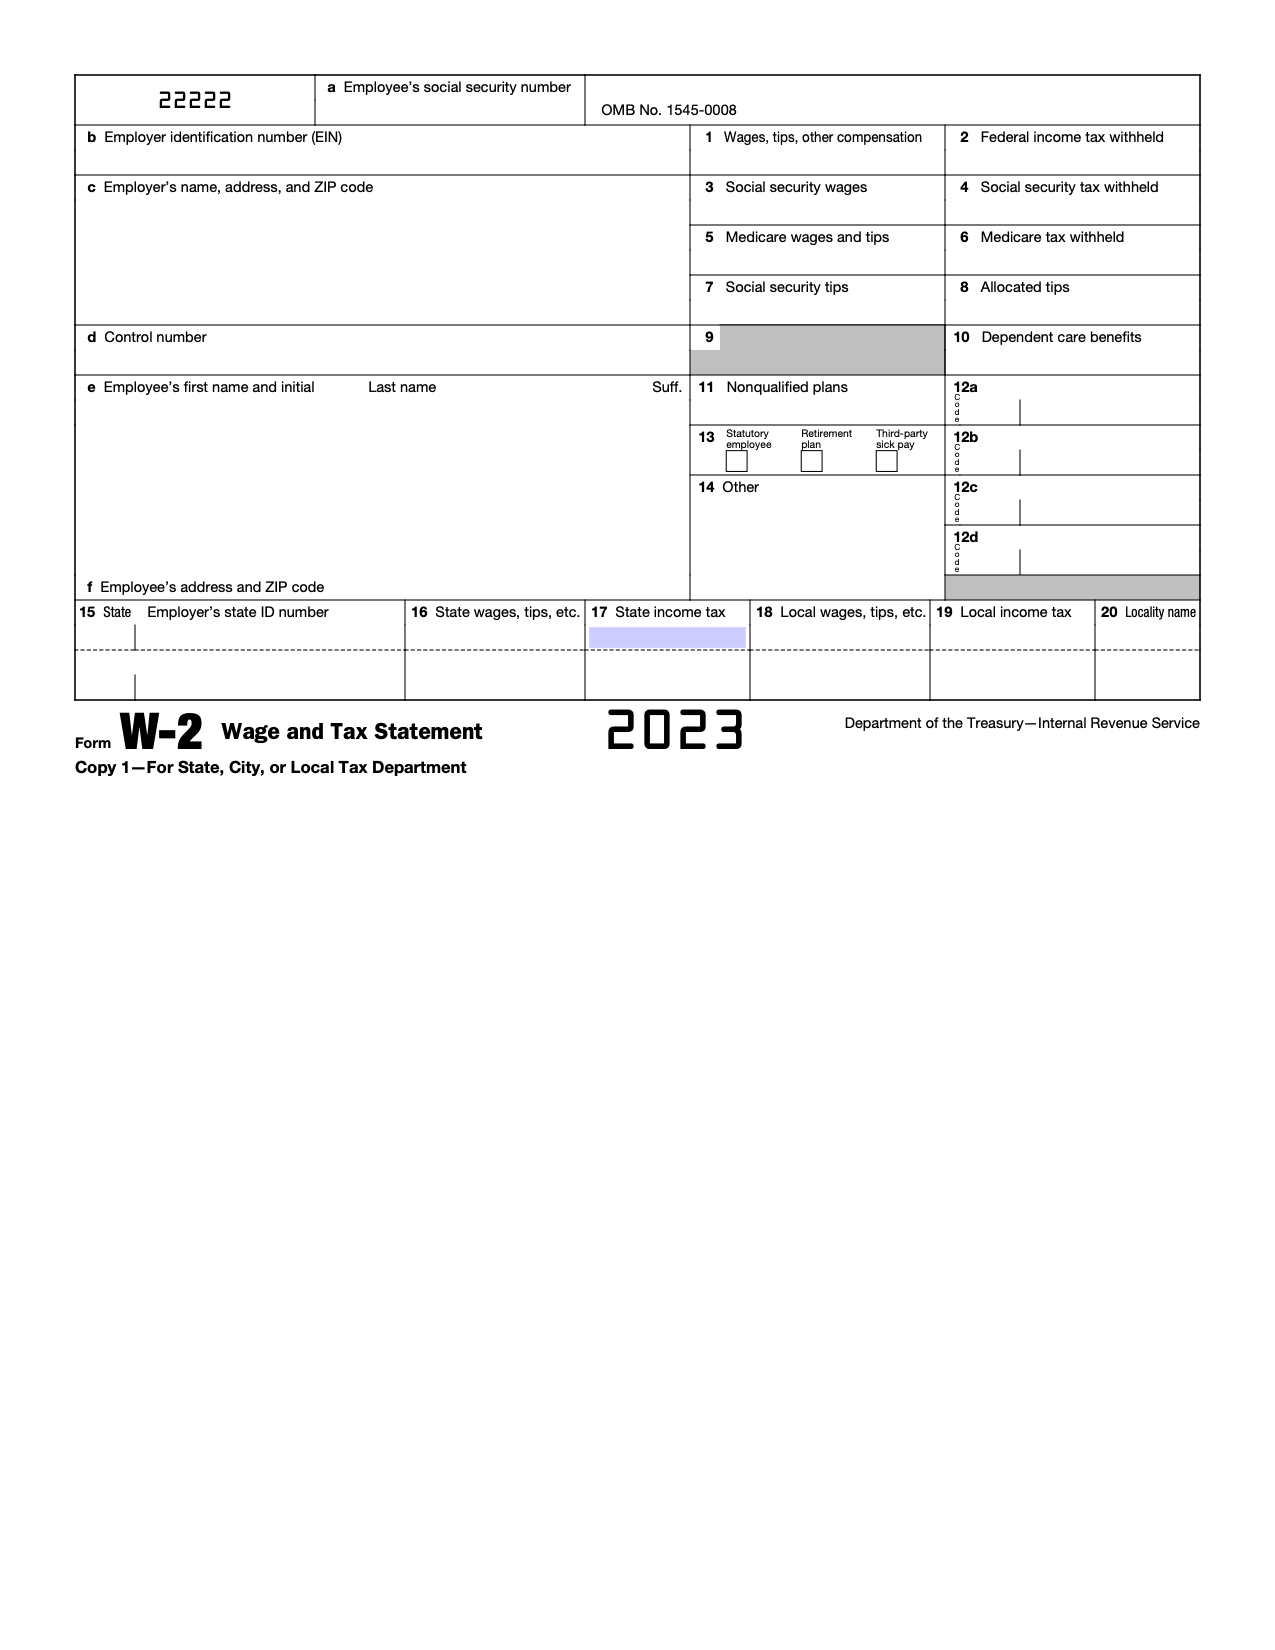 Free Irs Form W-2 | Wage And Tax Statement - Pdf – Eforms throughout W2 Form 2022 Pdf